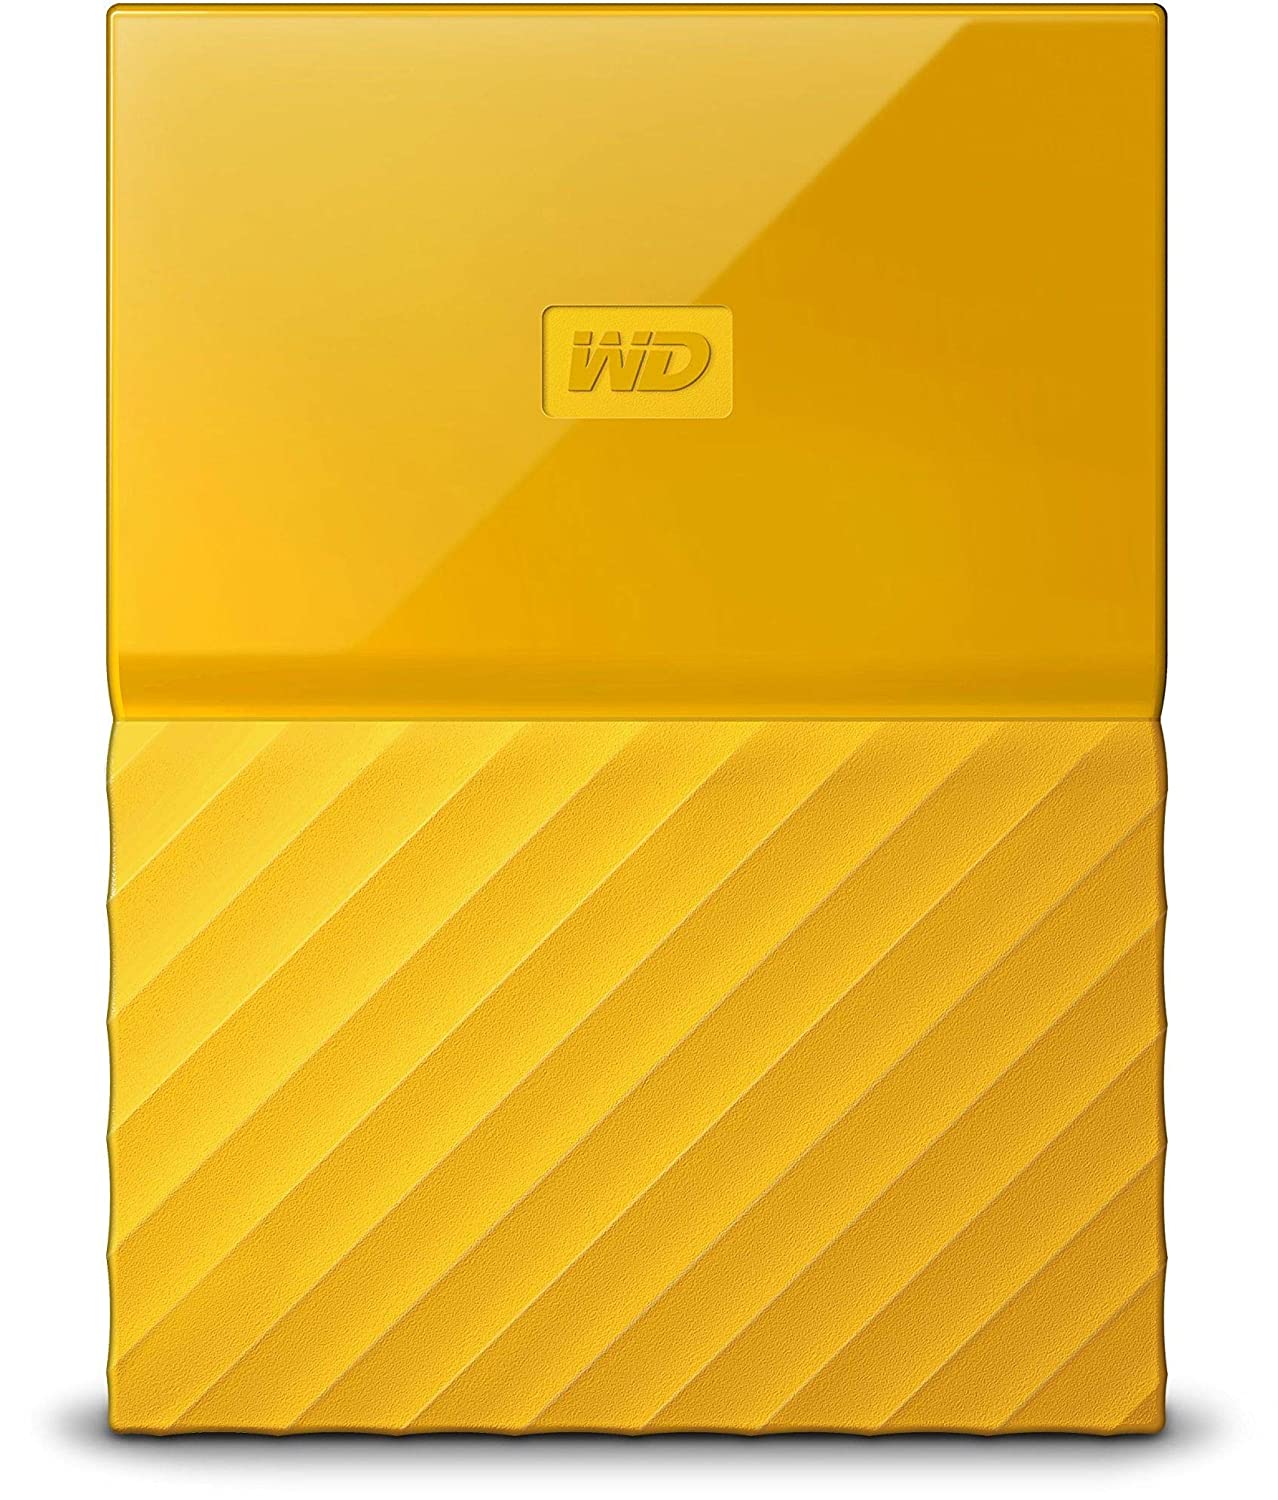 WD 1TB Hard Disk